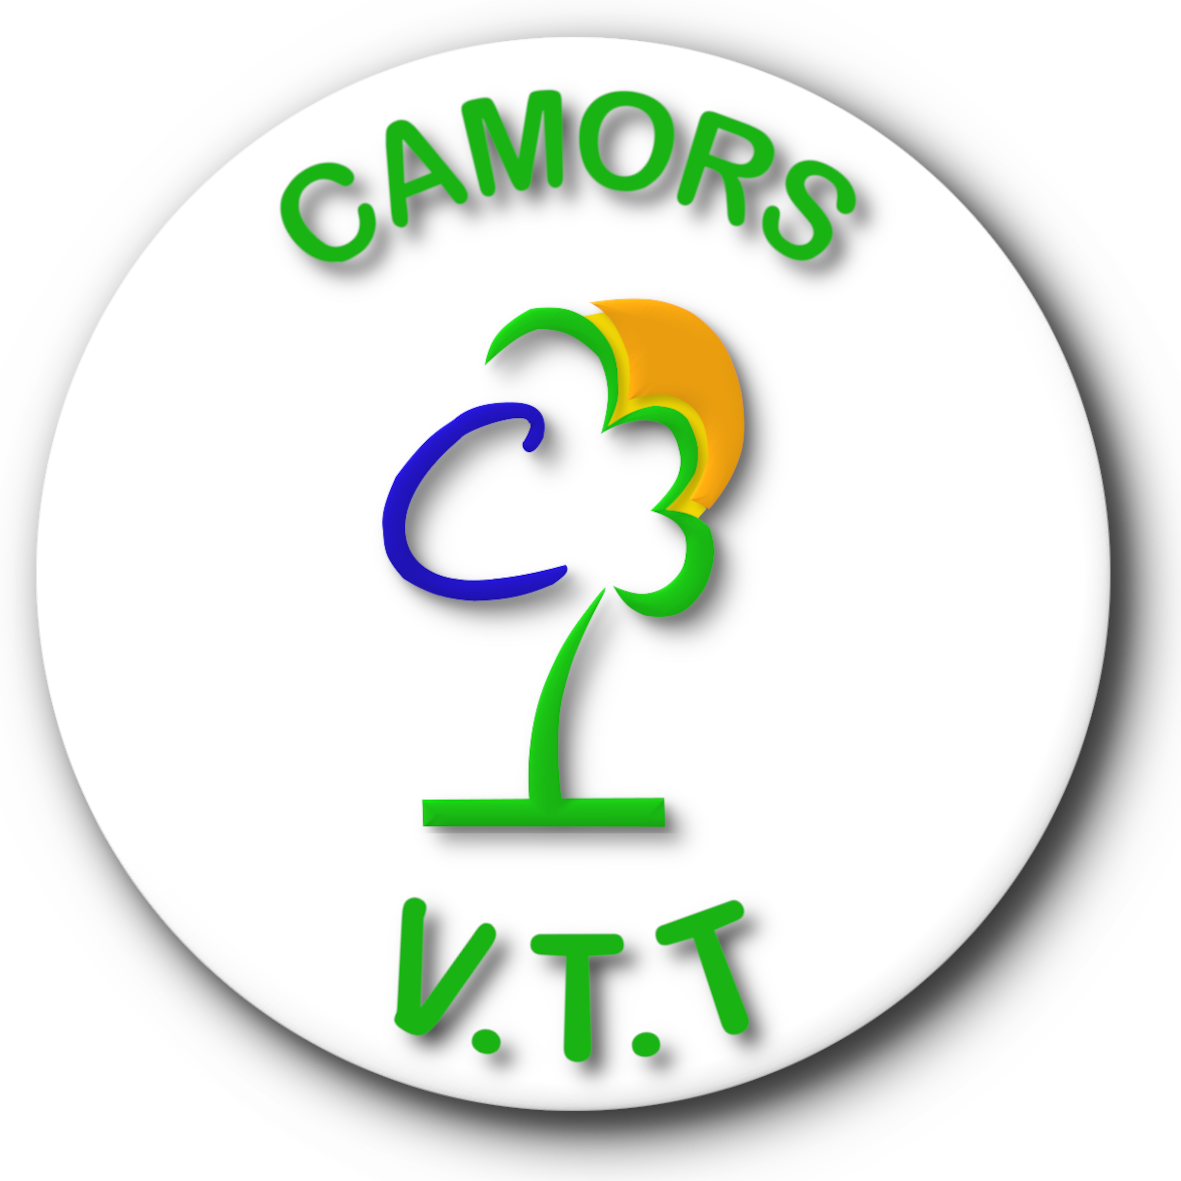 camors VTT.png